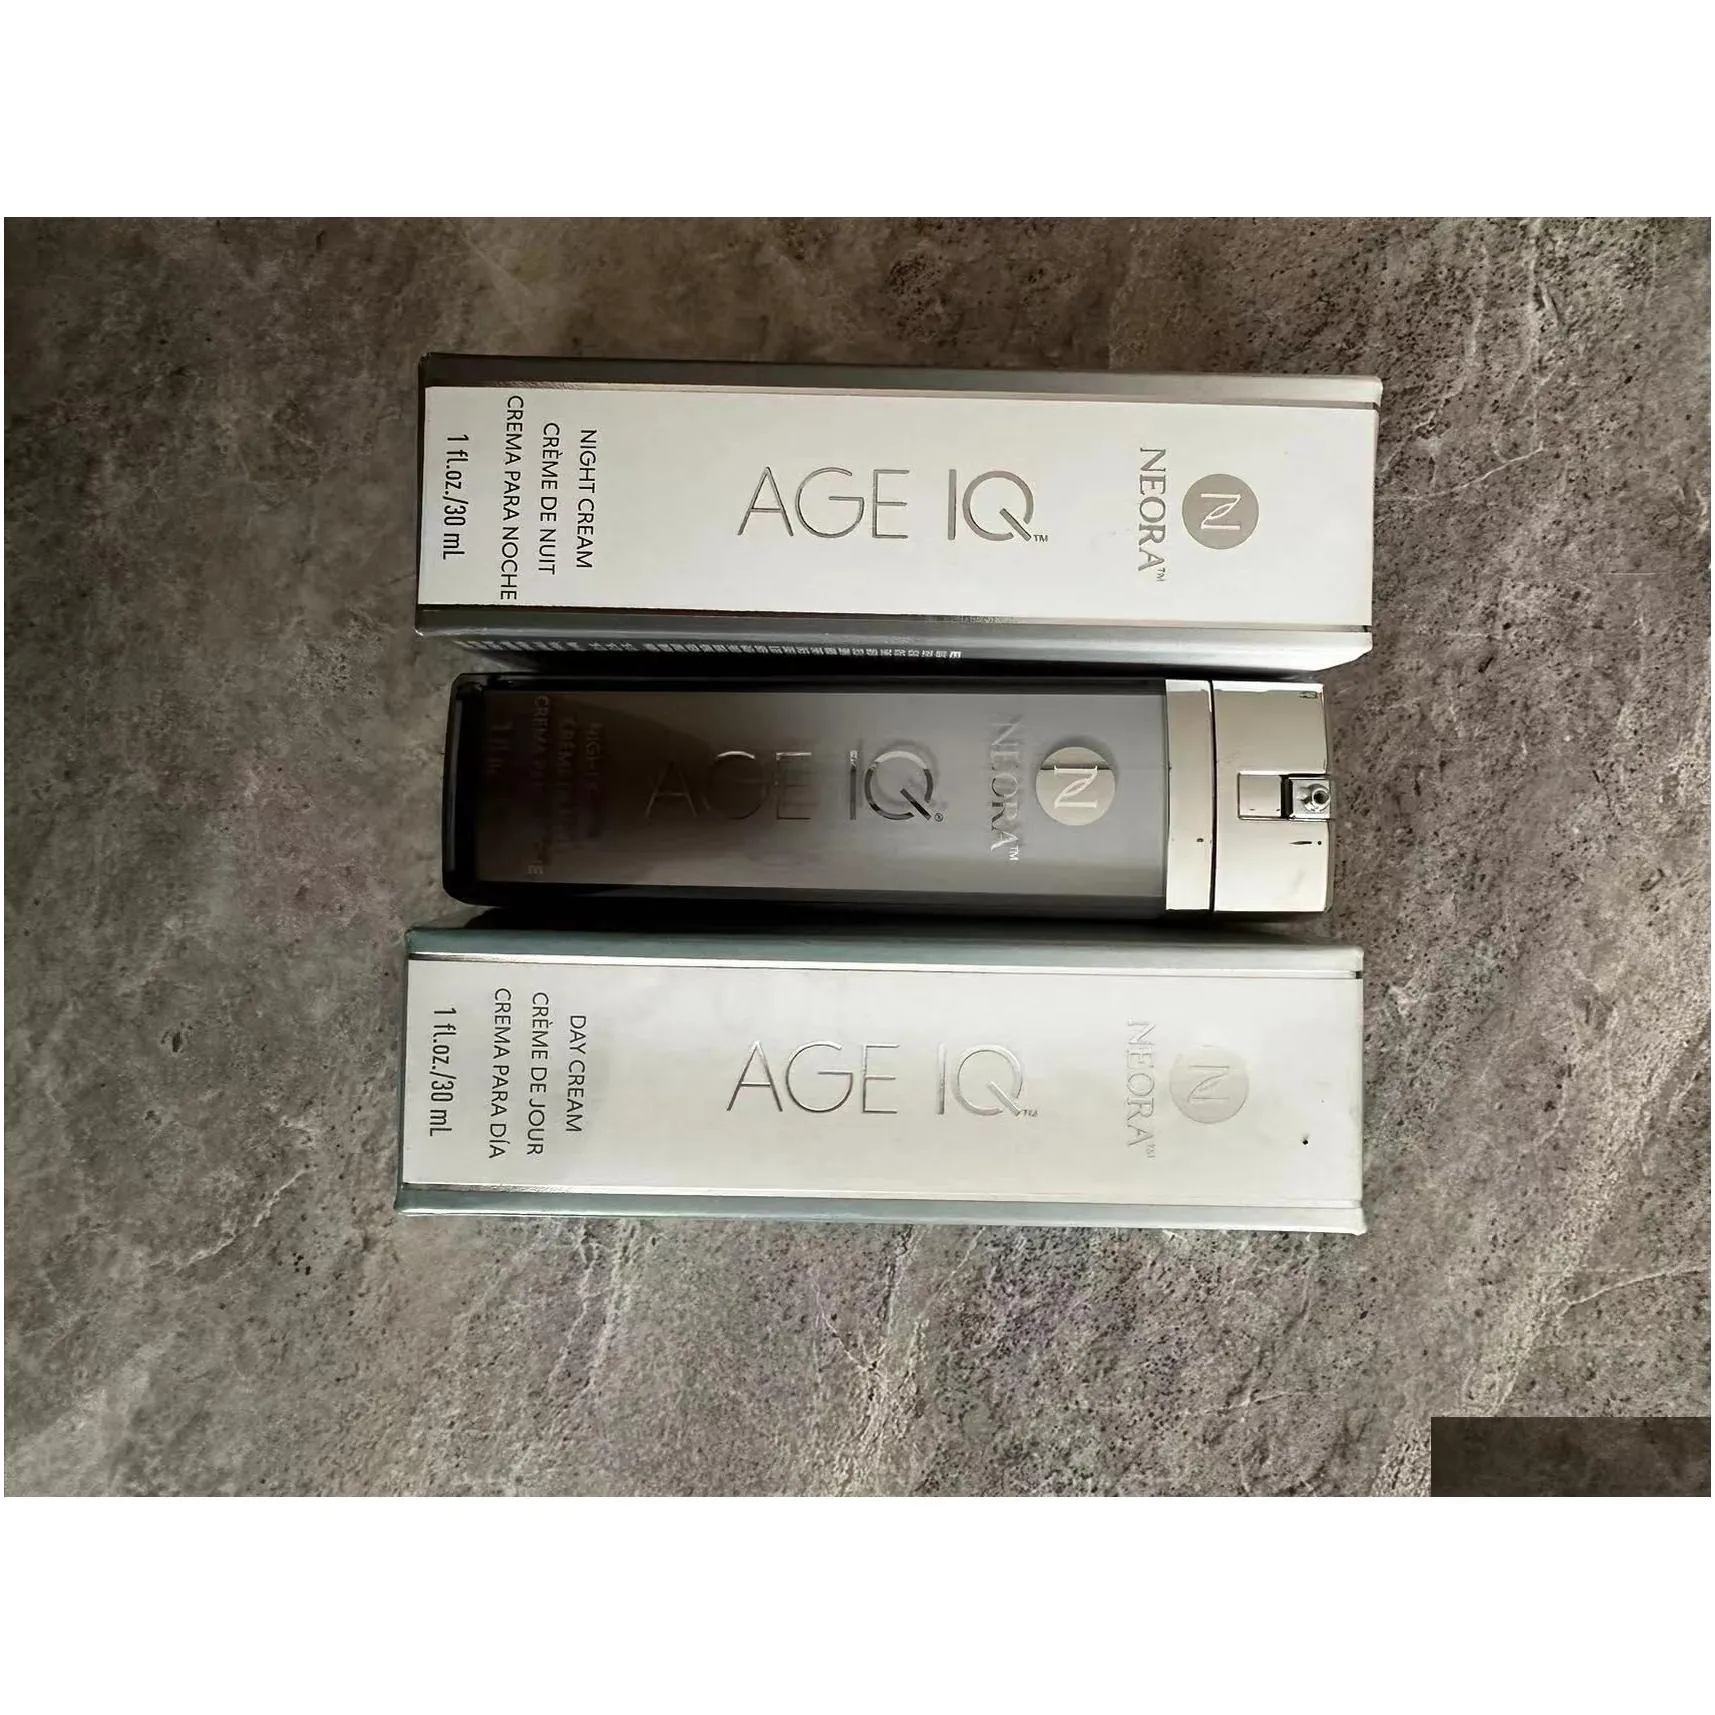 Bb & Cc Creams New Neora Age Iq Day Cream Nerium Ad Night 30Ml Skin Care Moisturizing Face Creamy Sealed Box Drop Delivery Health Beau Ot2Gl